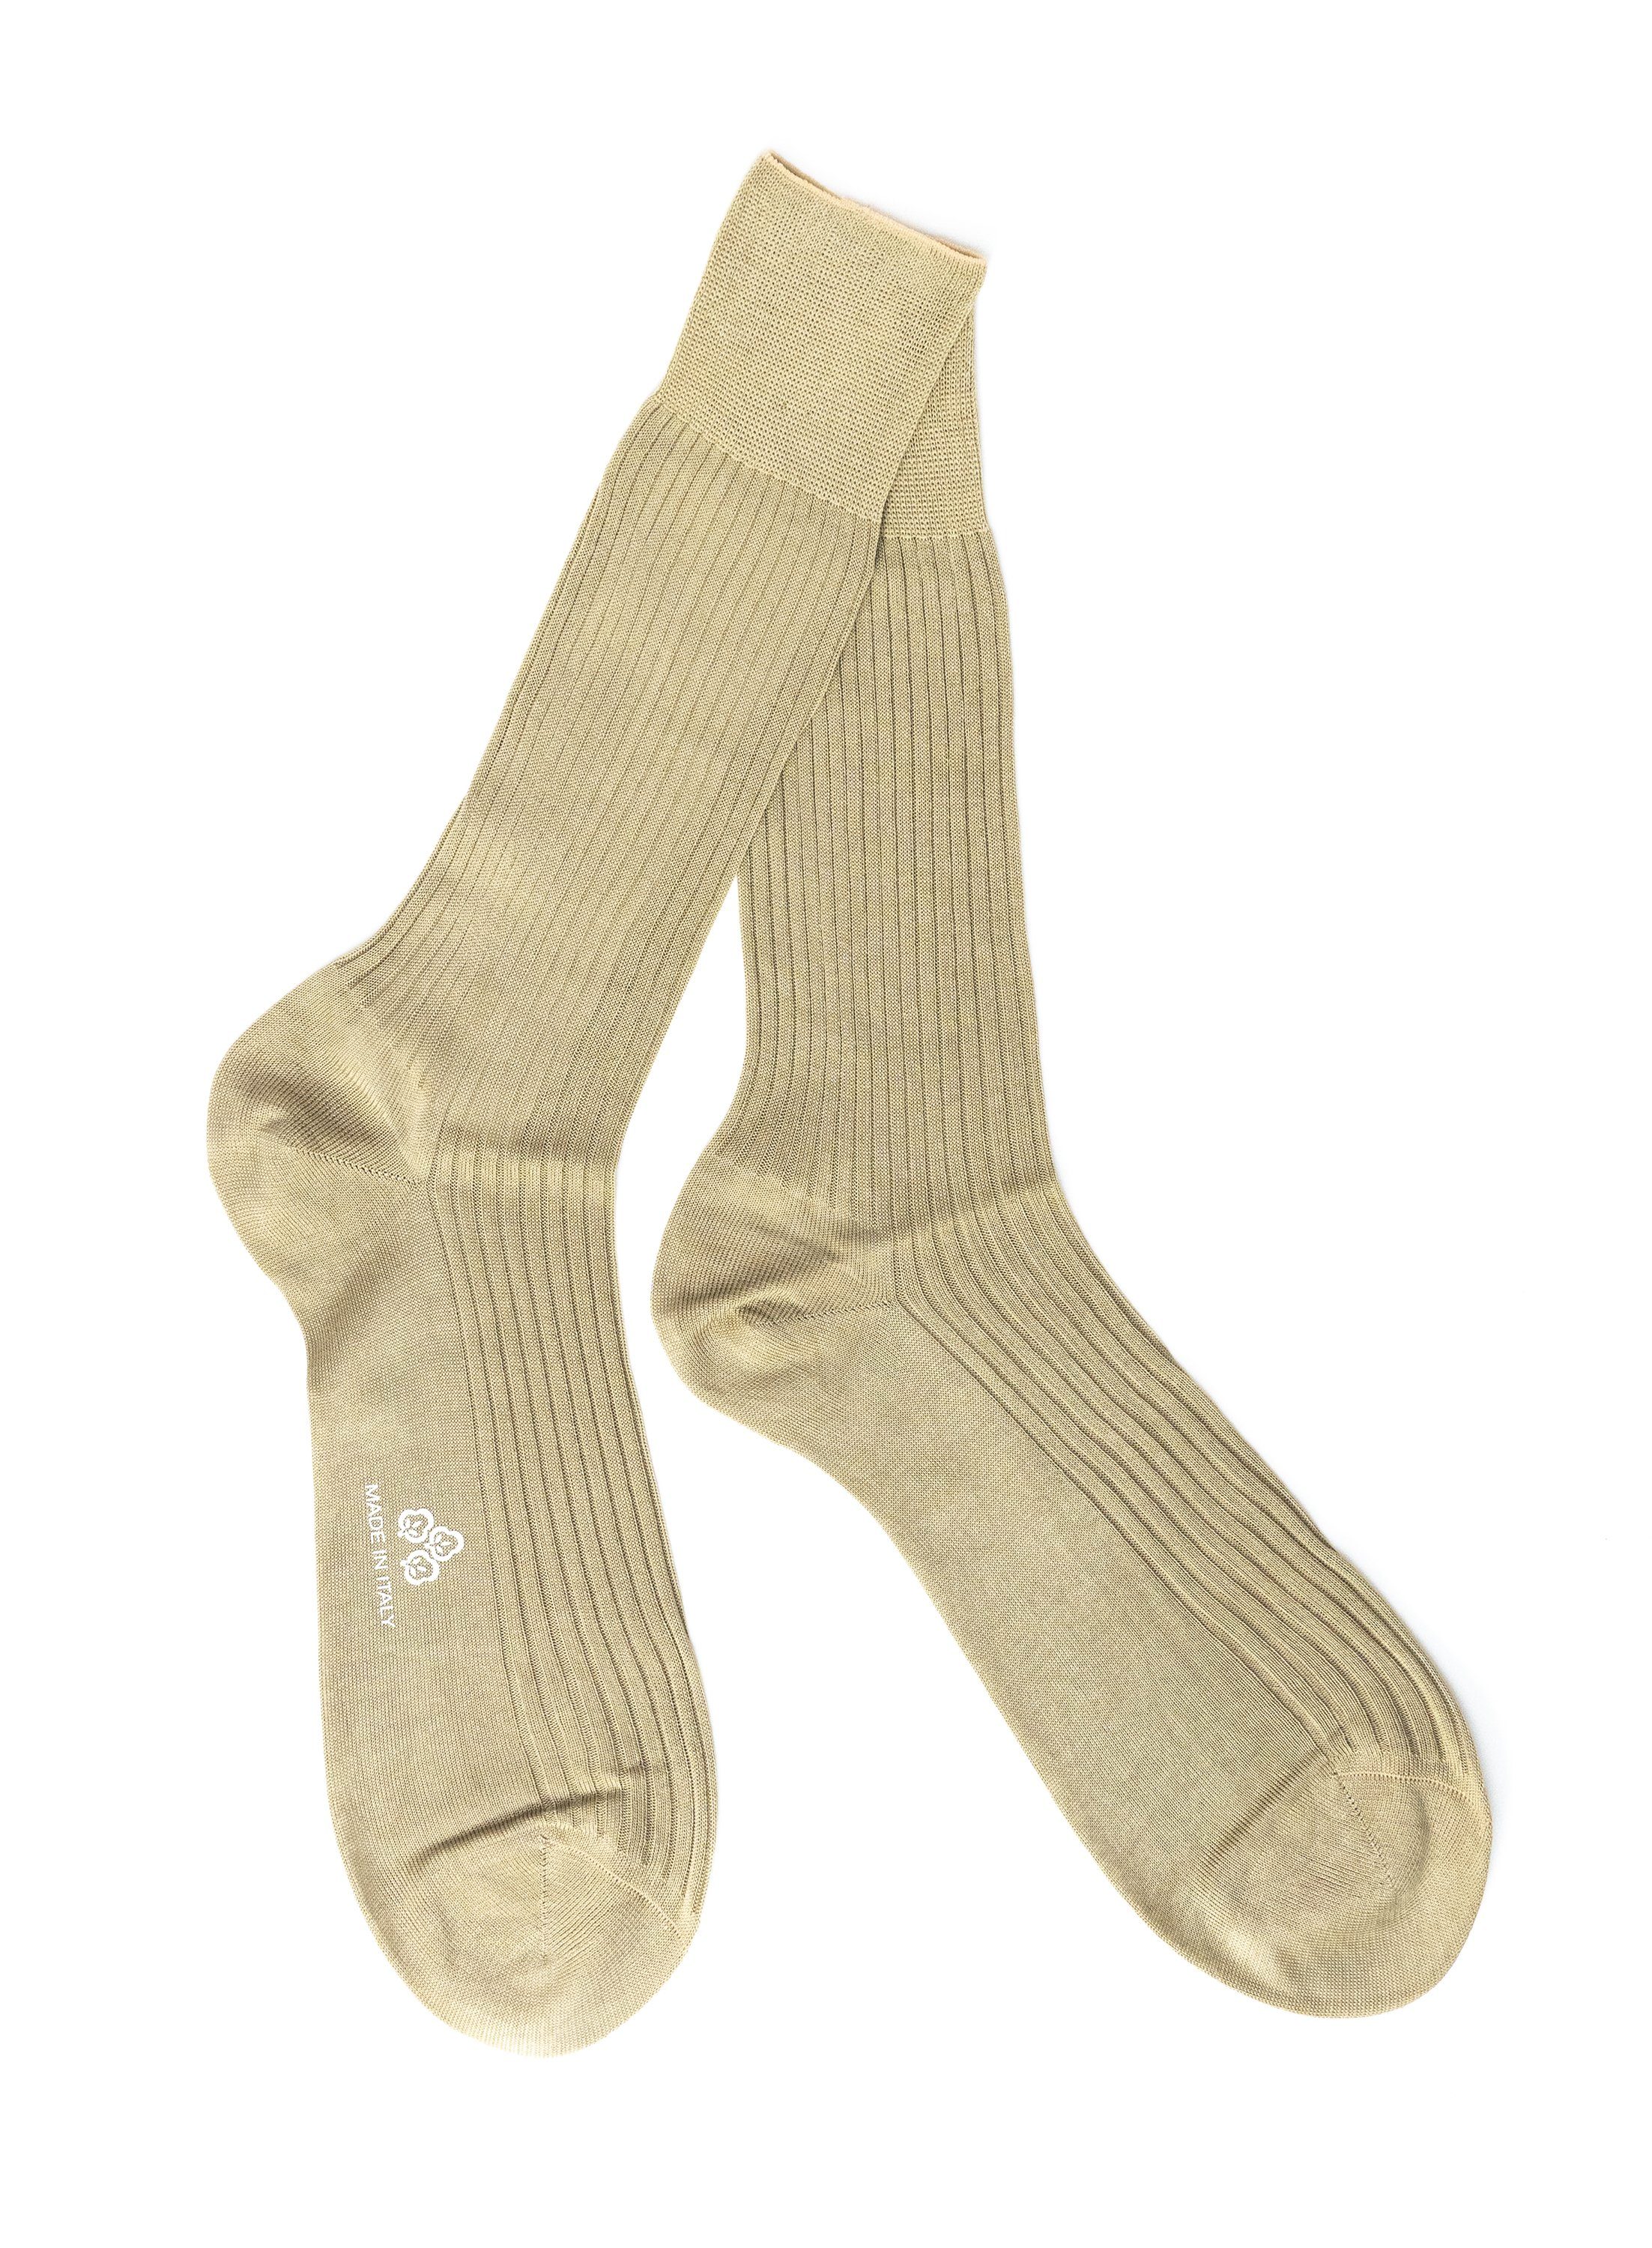 Business-Socken, in Socken (1 Carlo Di Made Gentleman-Socken, Baumwolle, Italy Paar) aus Beige